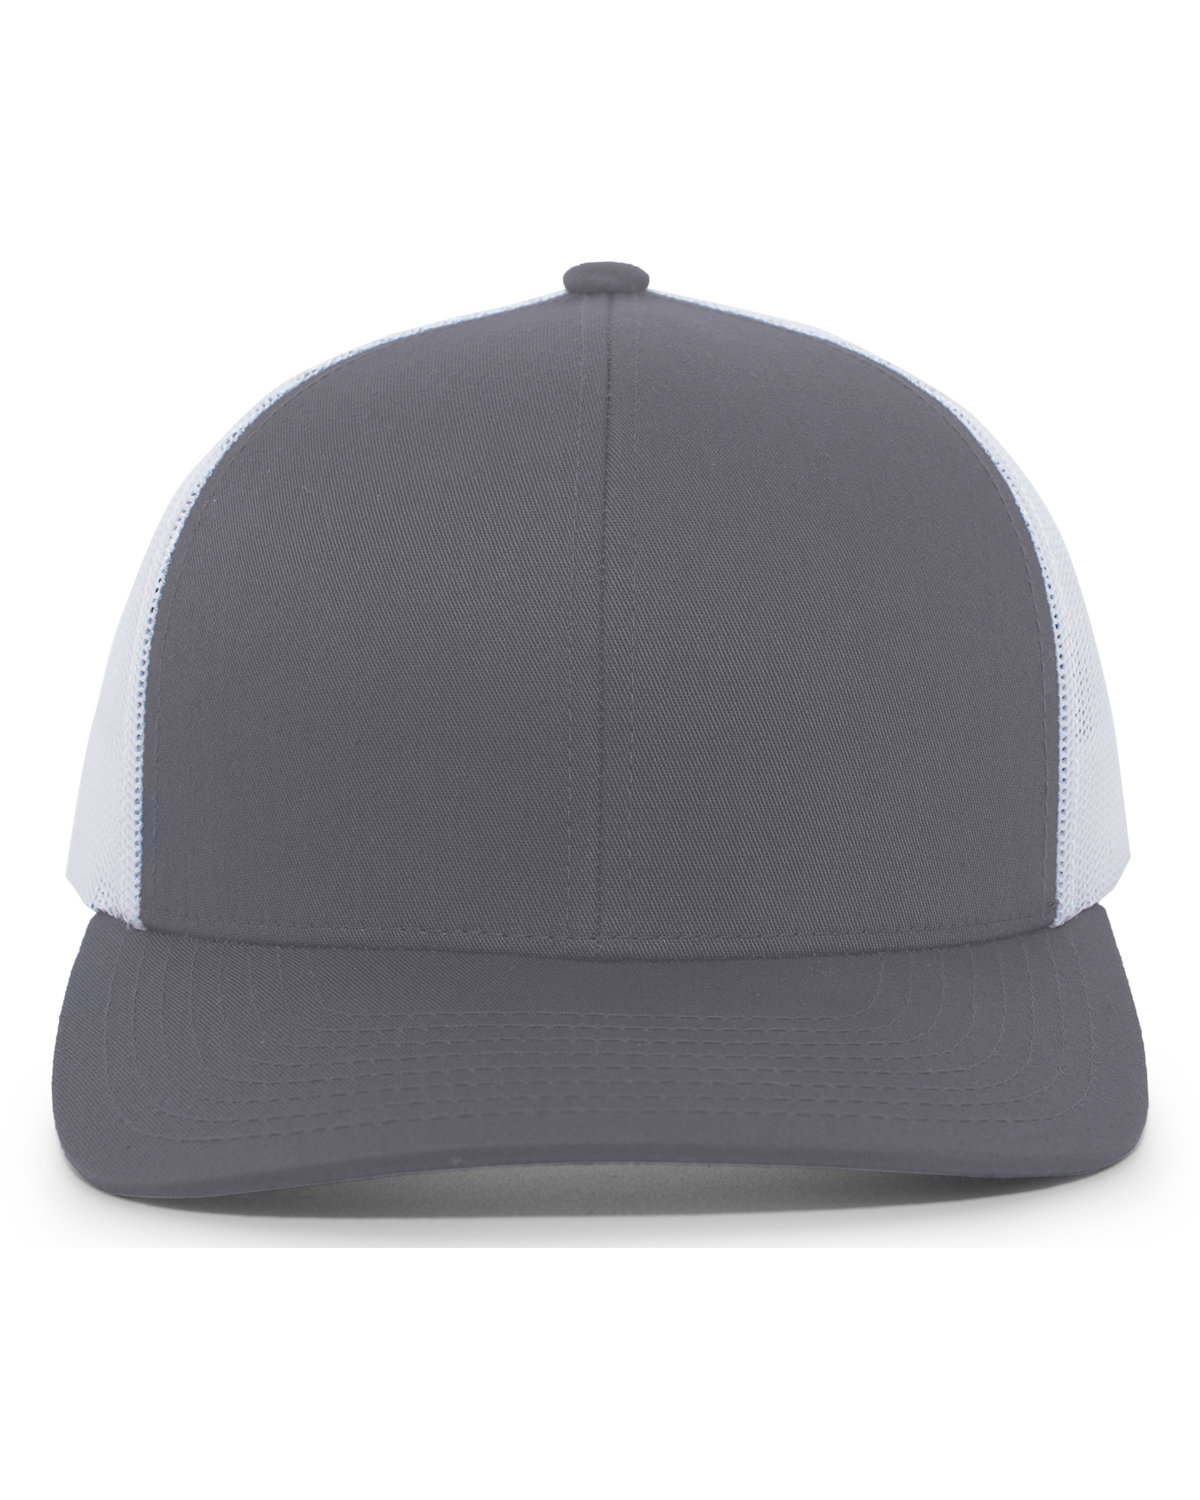 Pacific Headwear Trucker Snapback Hat GRAPHITE/ WHITE 